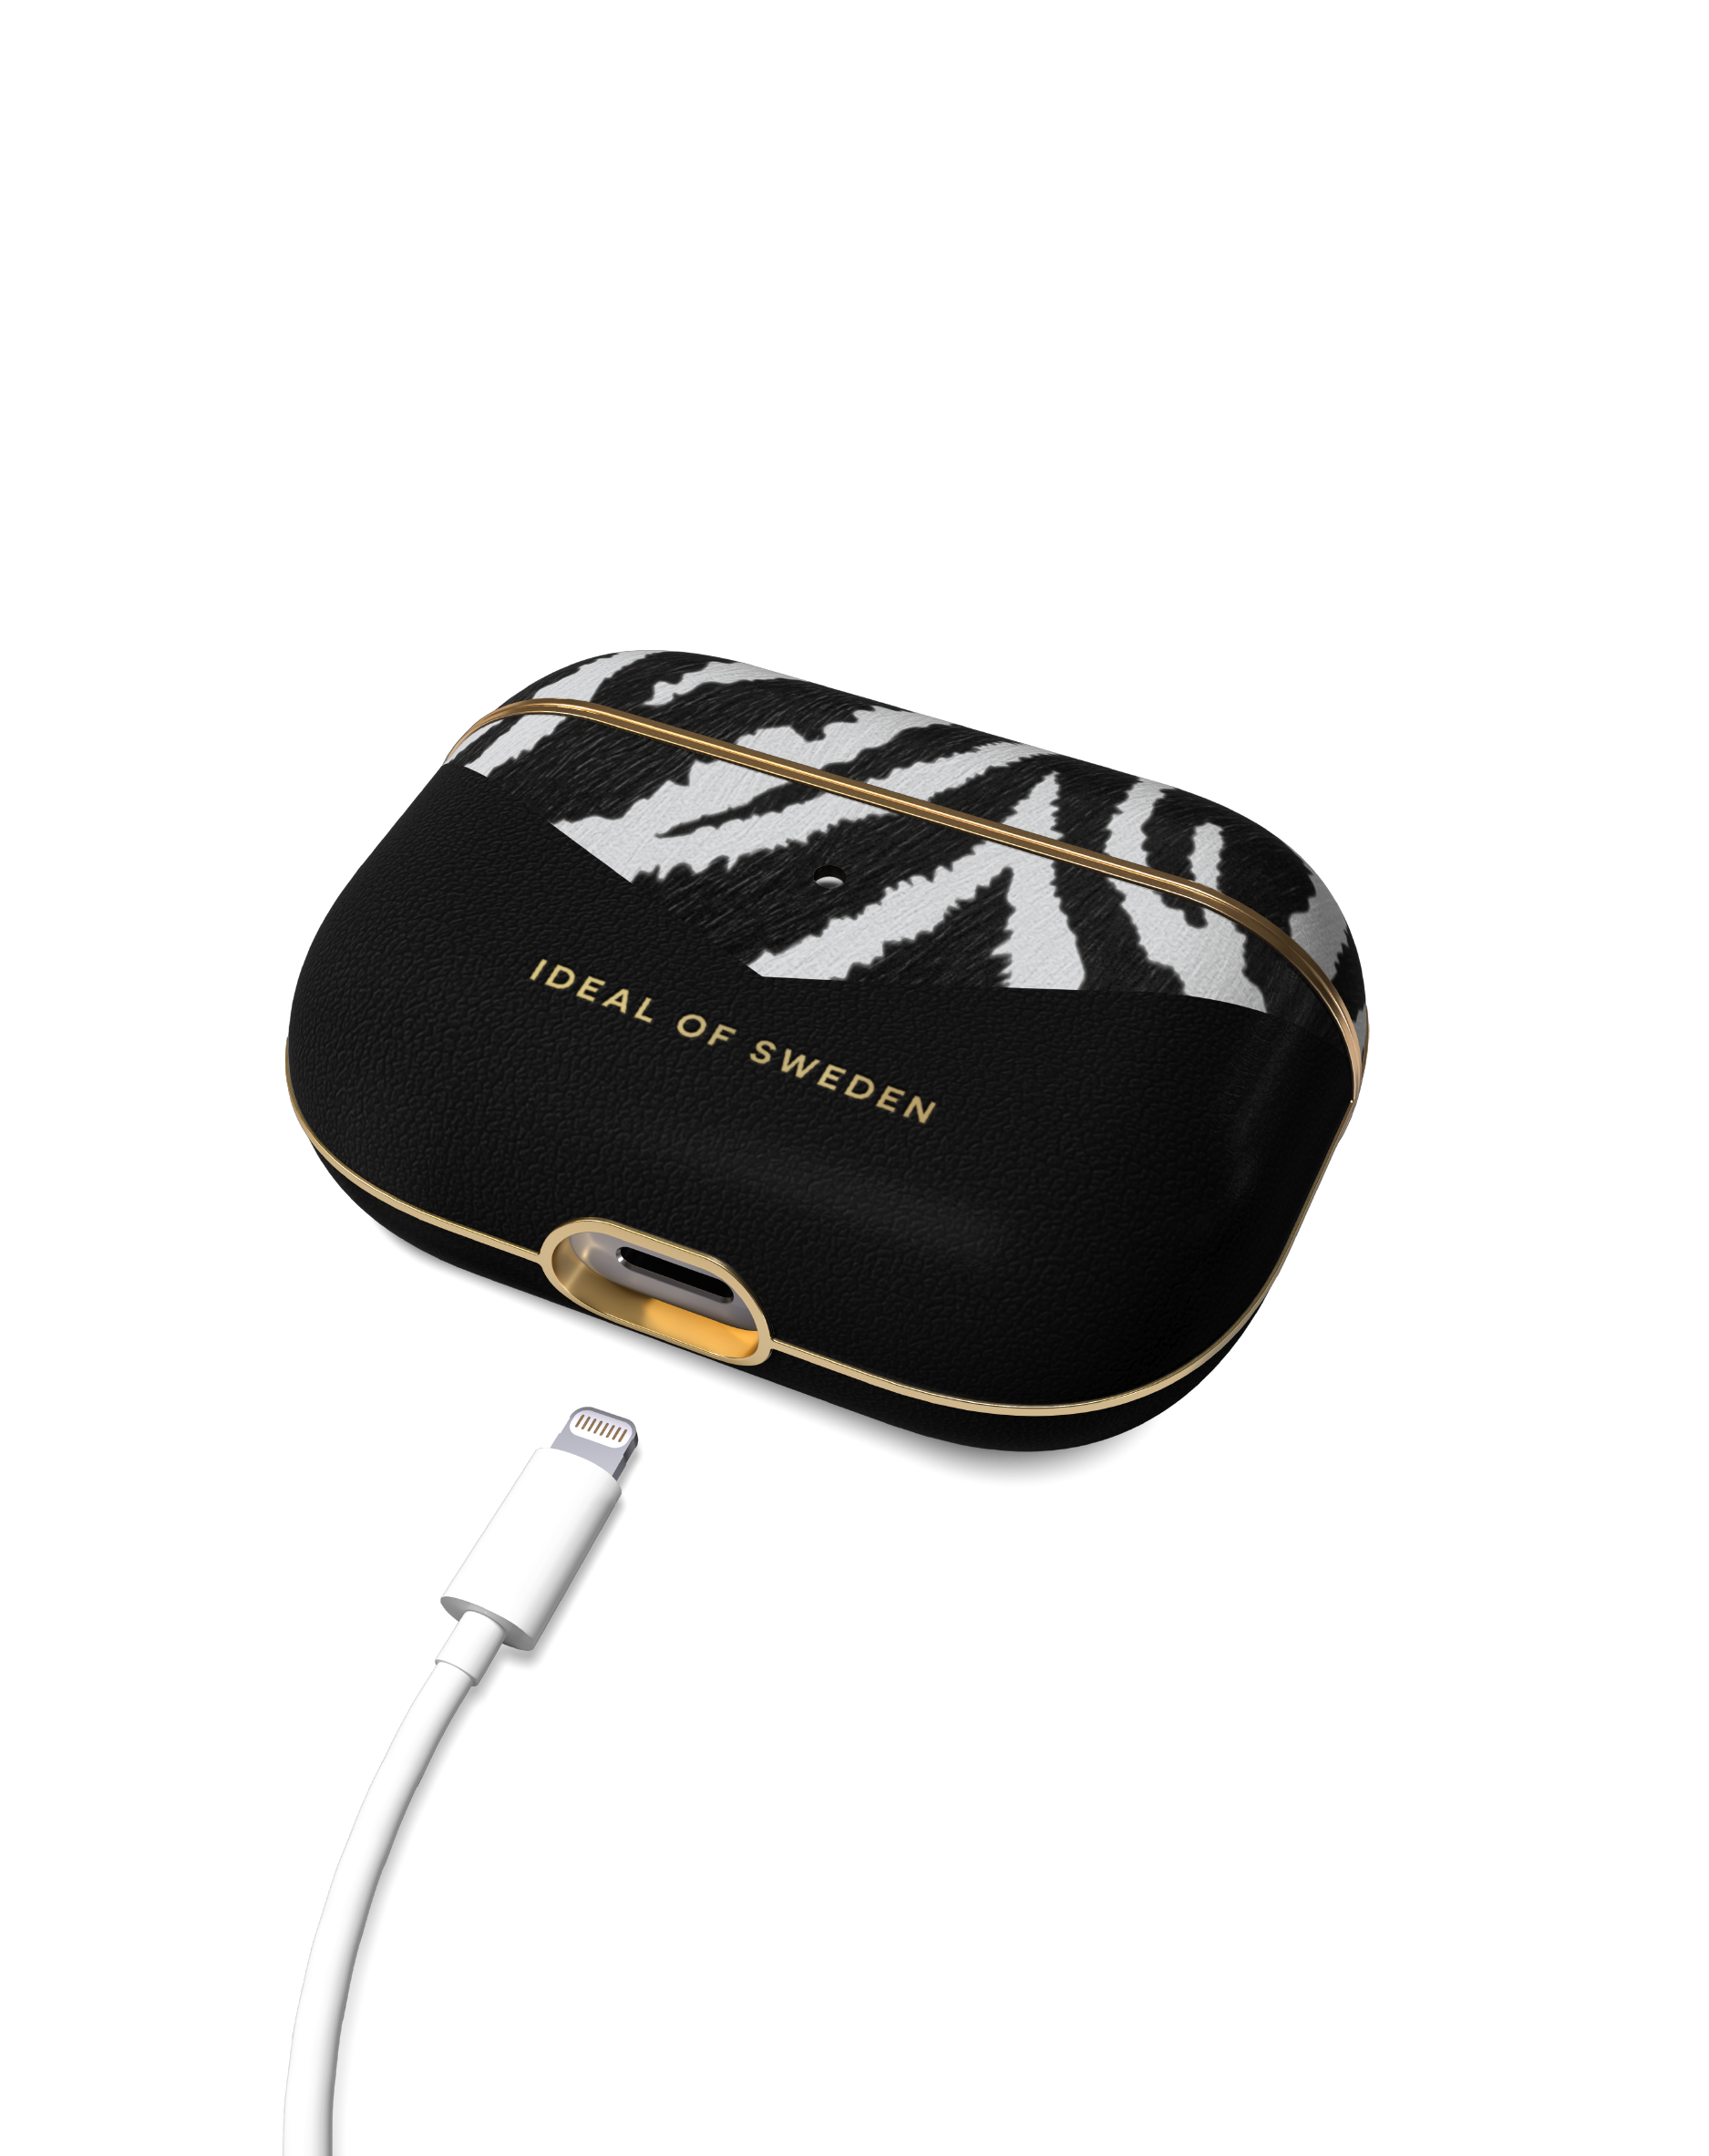 IDEAL passend Apple AirPod Full OF SWEDEN für: IDFAPC-PRO-247 Zebra Case Eclipse Cover